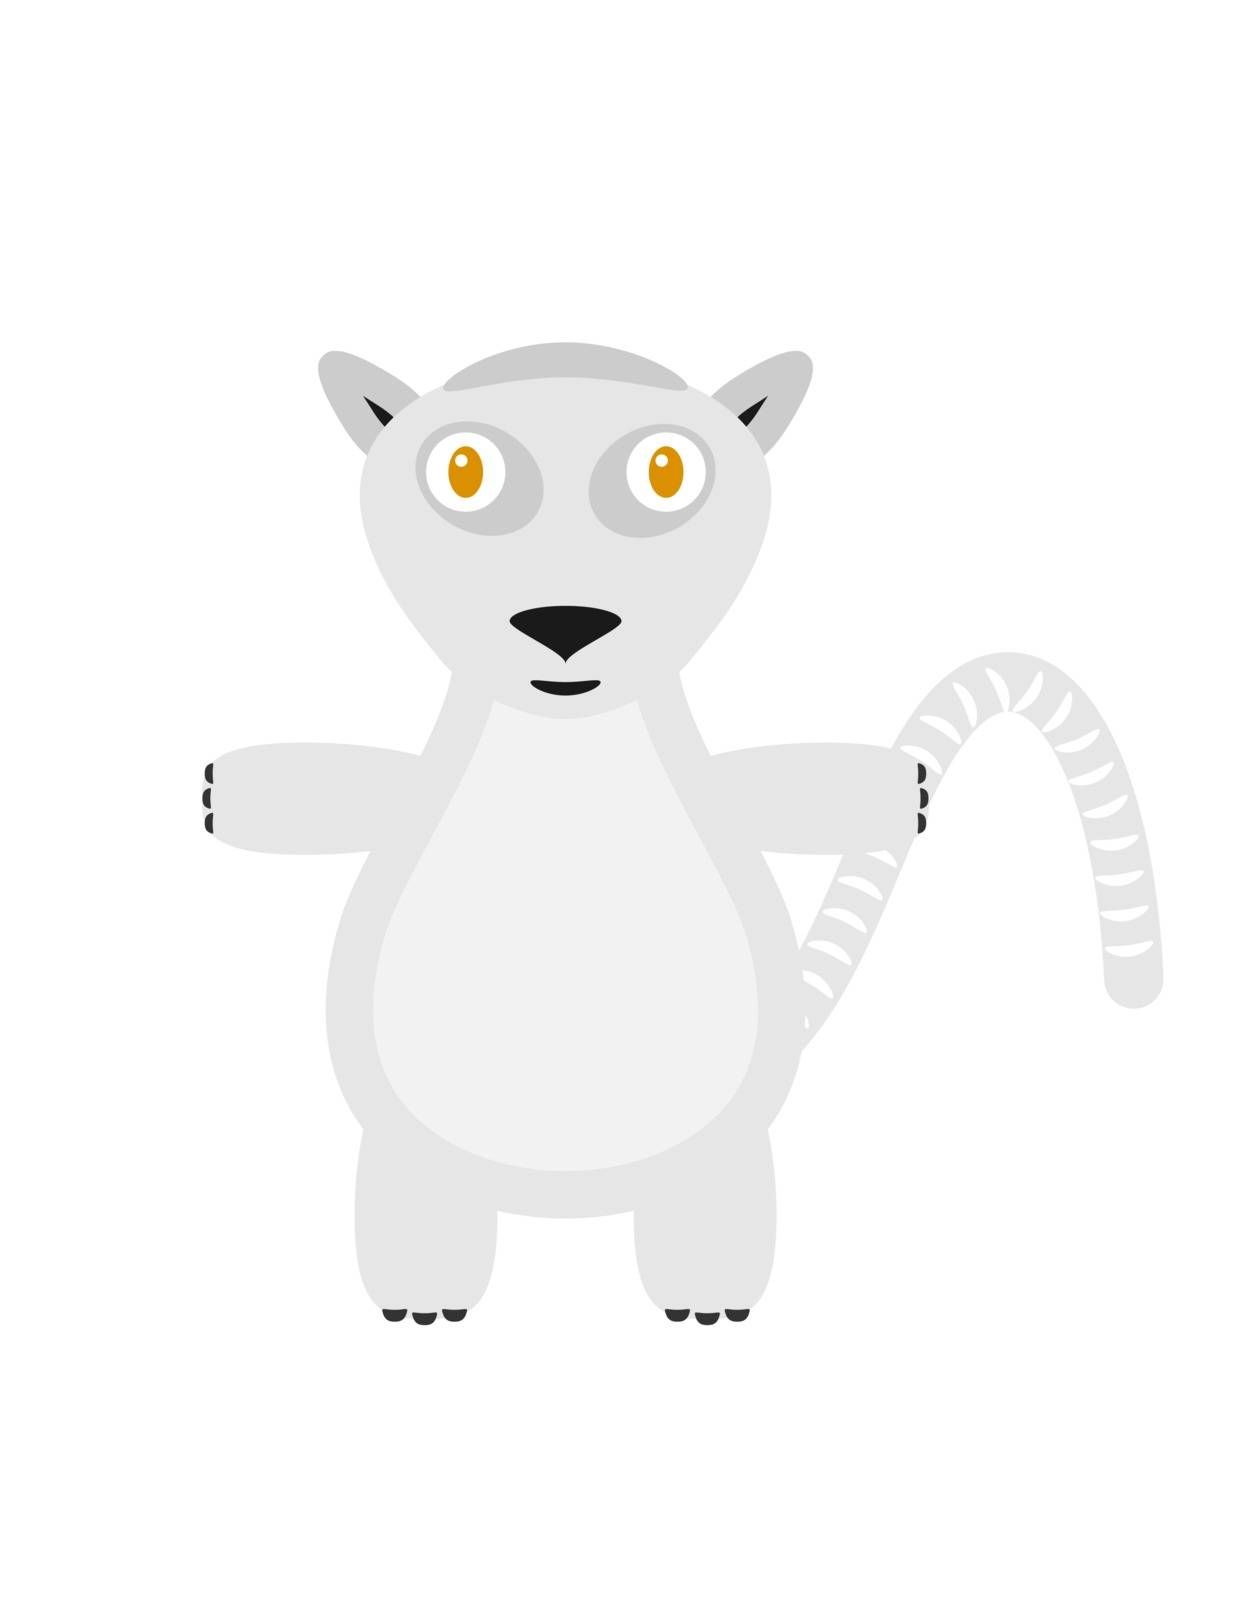 Funny lemur character by muuraa